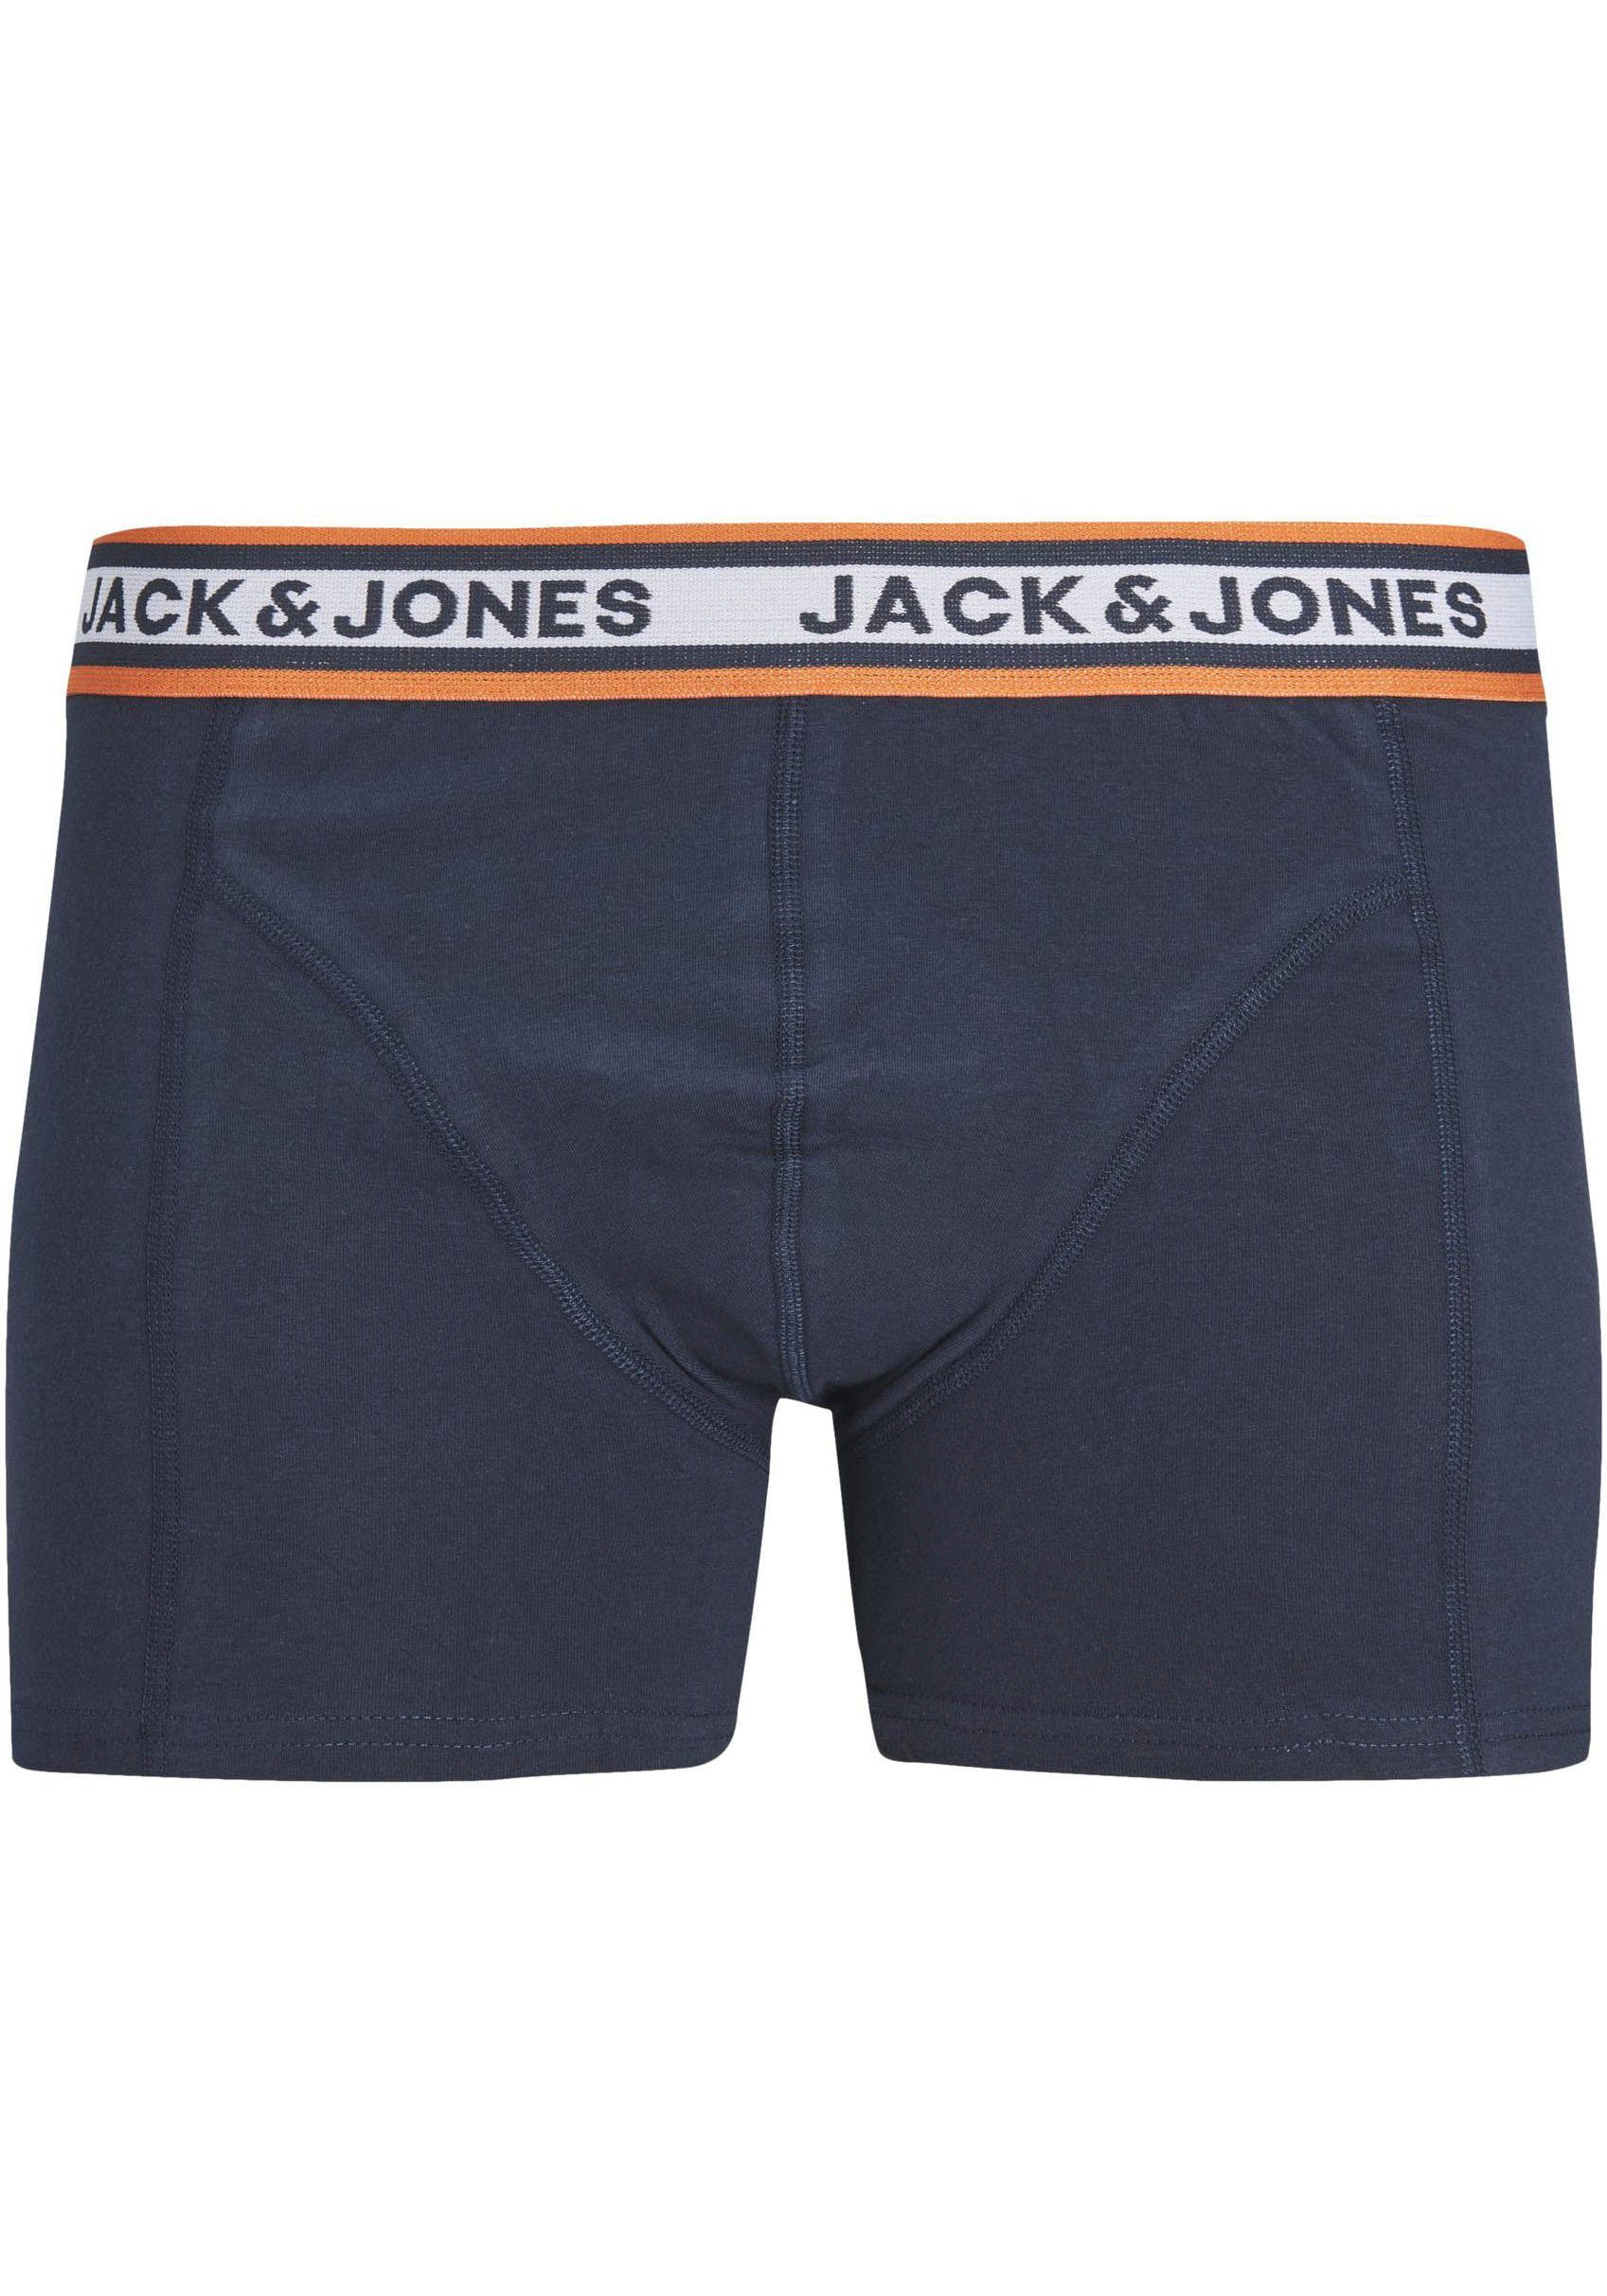 blazer 3 / TRUNKS 3-St) Jones & / JACMYLE NOOS (Packung, Trunk PACK Jack exub navy dgm